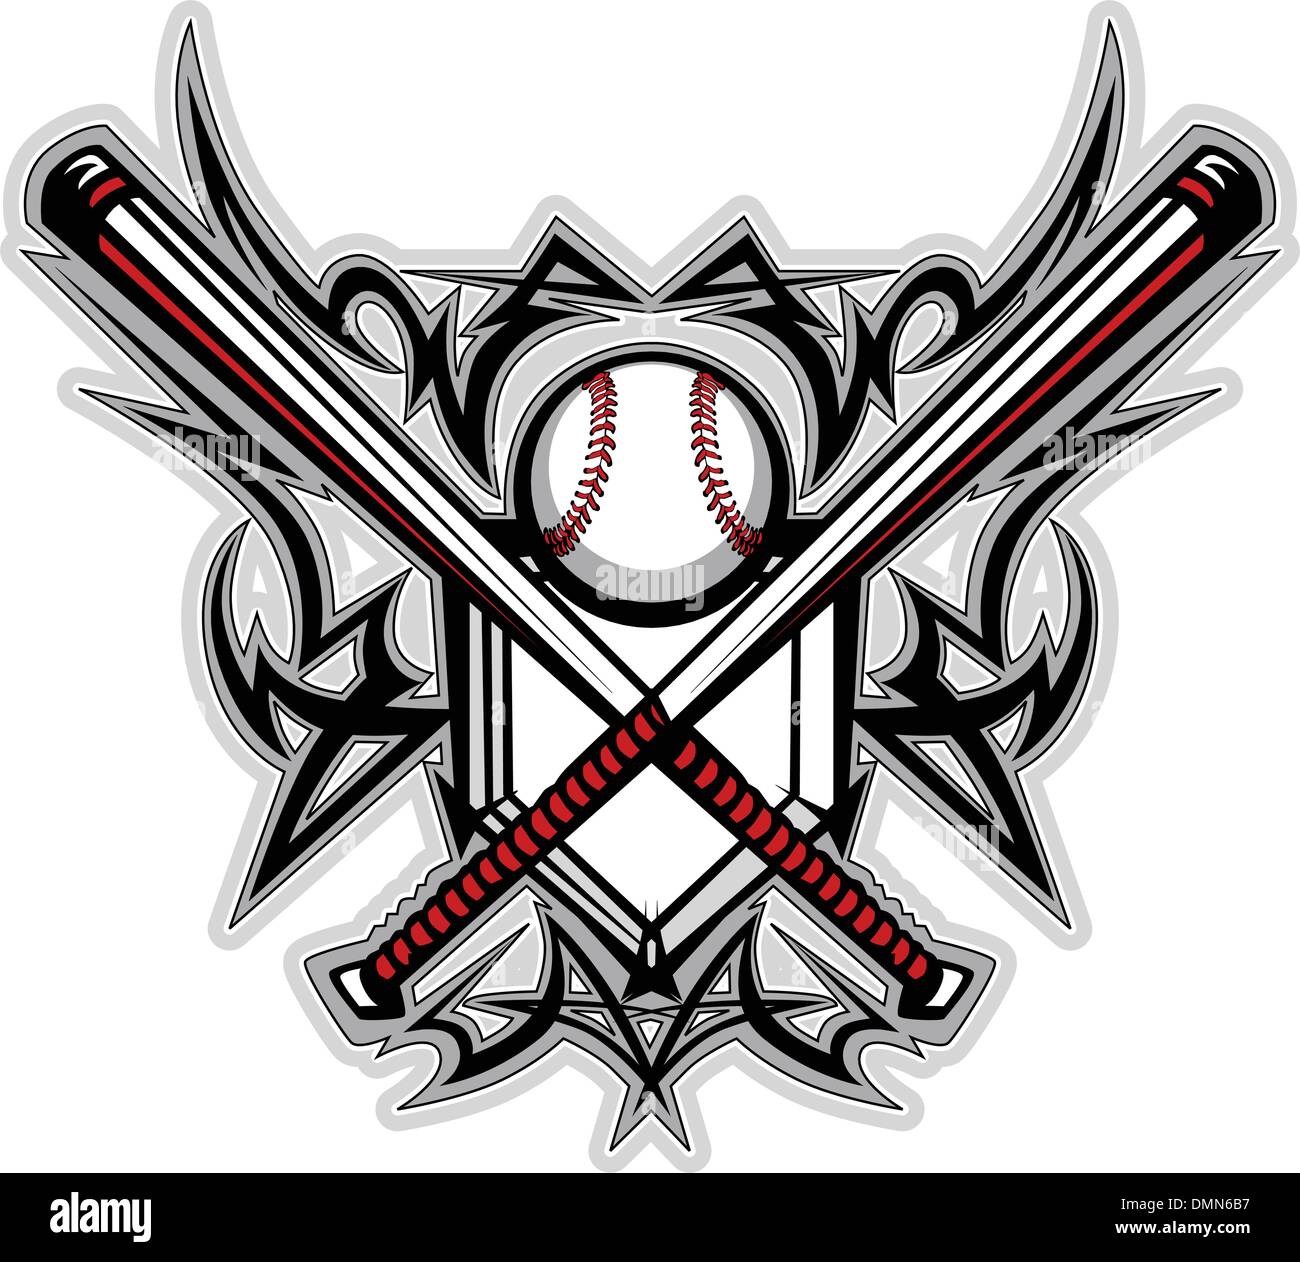 Baseball Softball Bats Tribal Graphic Vector Image Stock Vector